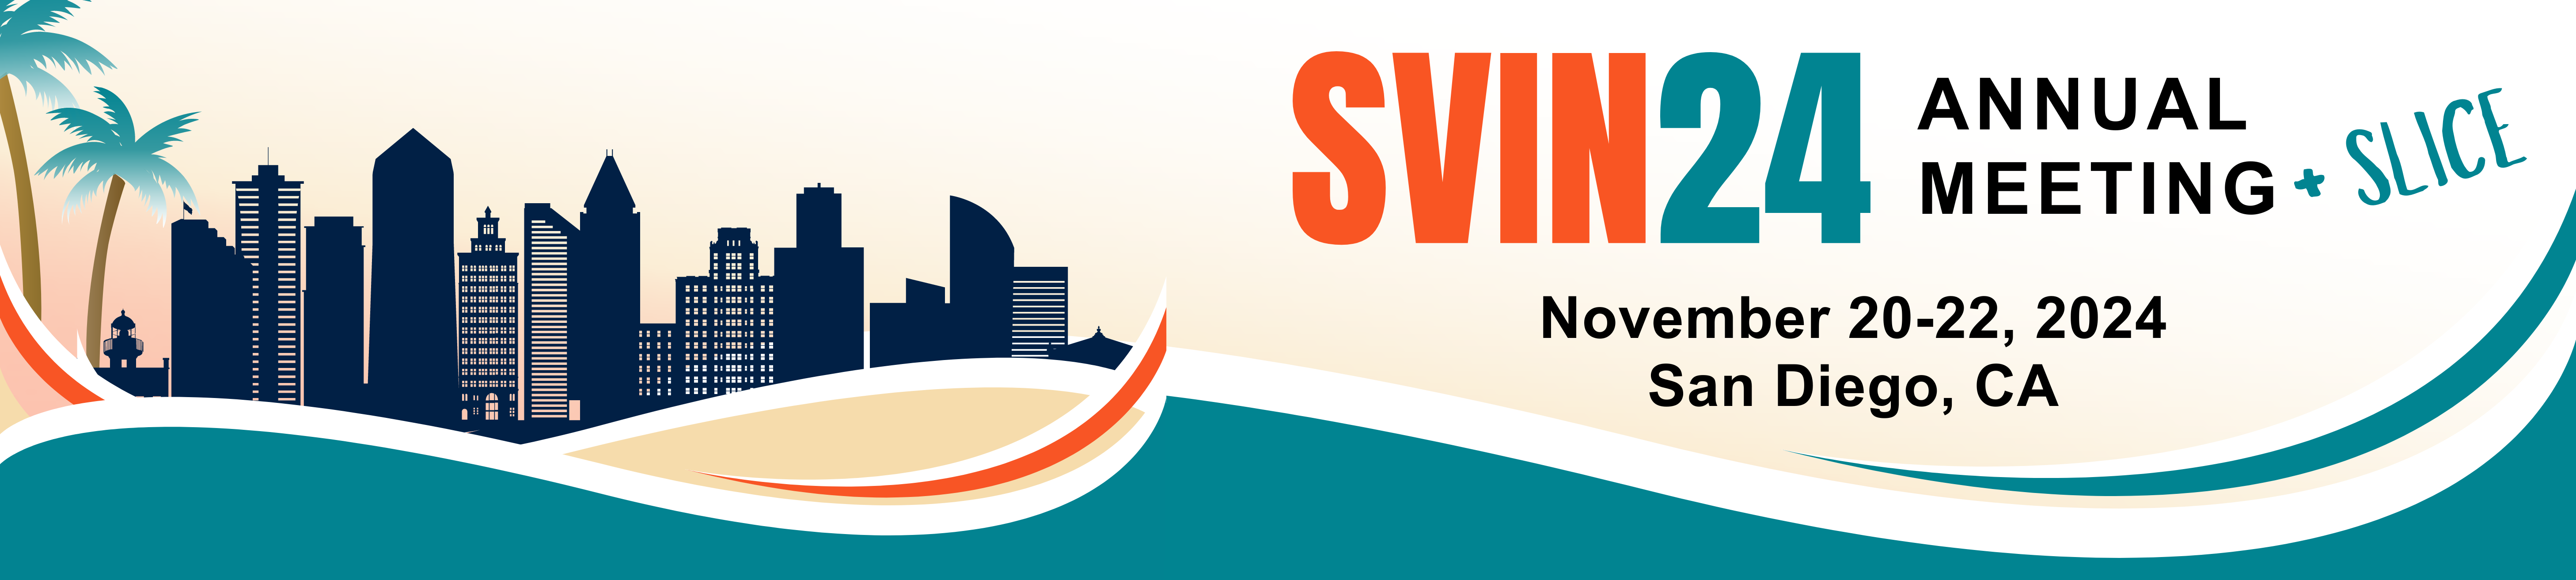 SVIN24 Annual Meeting - November 20-22, 2024